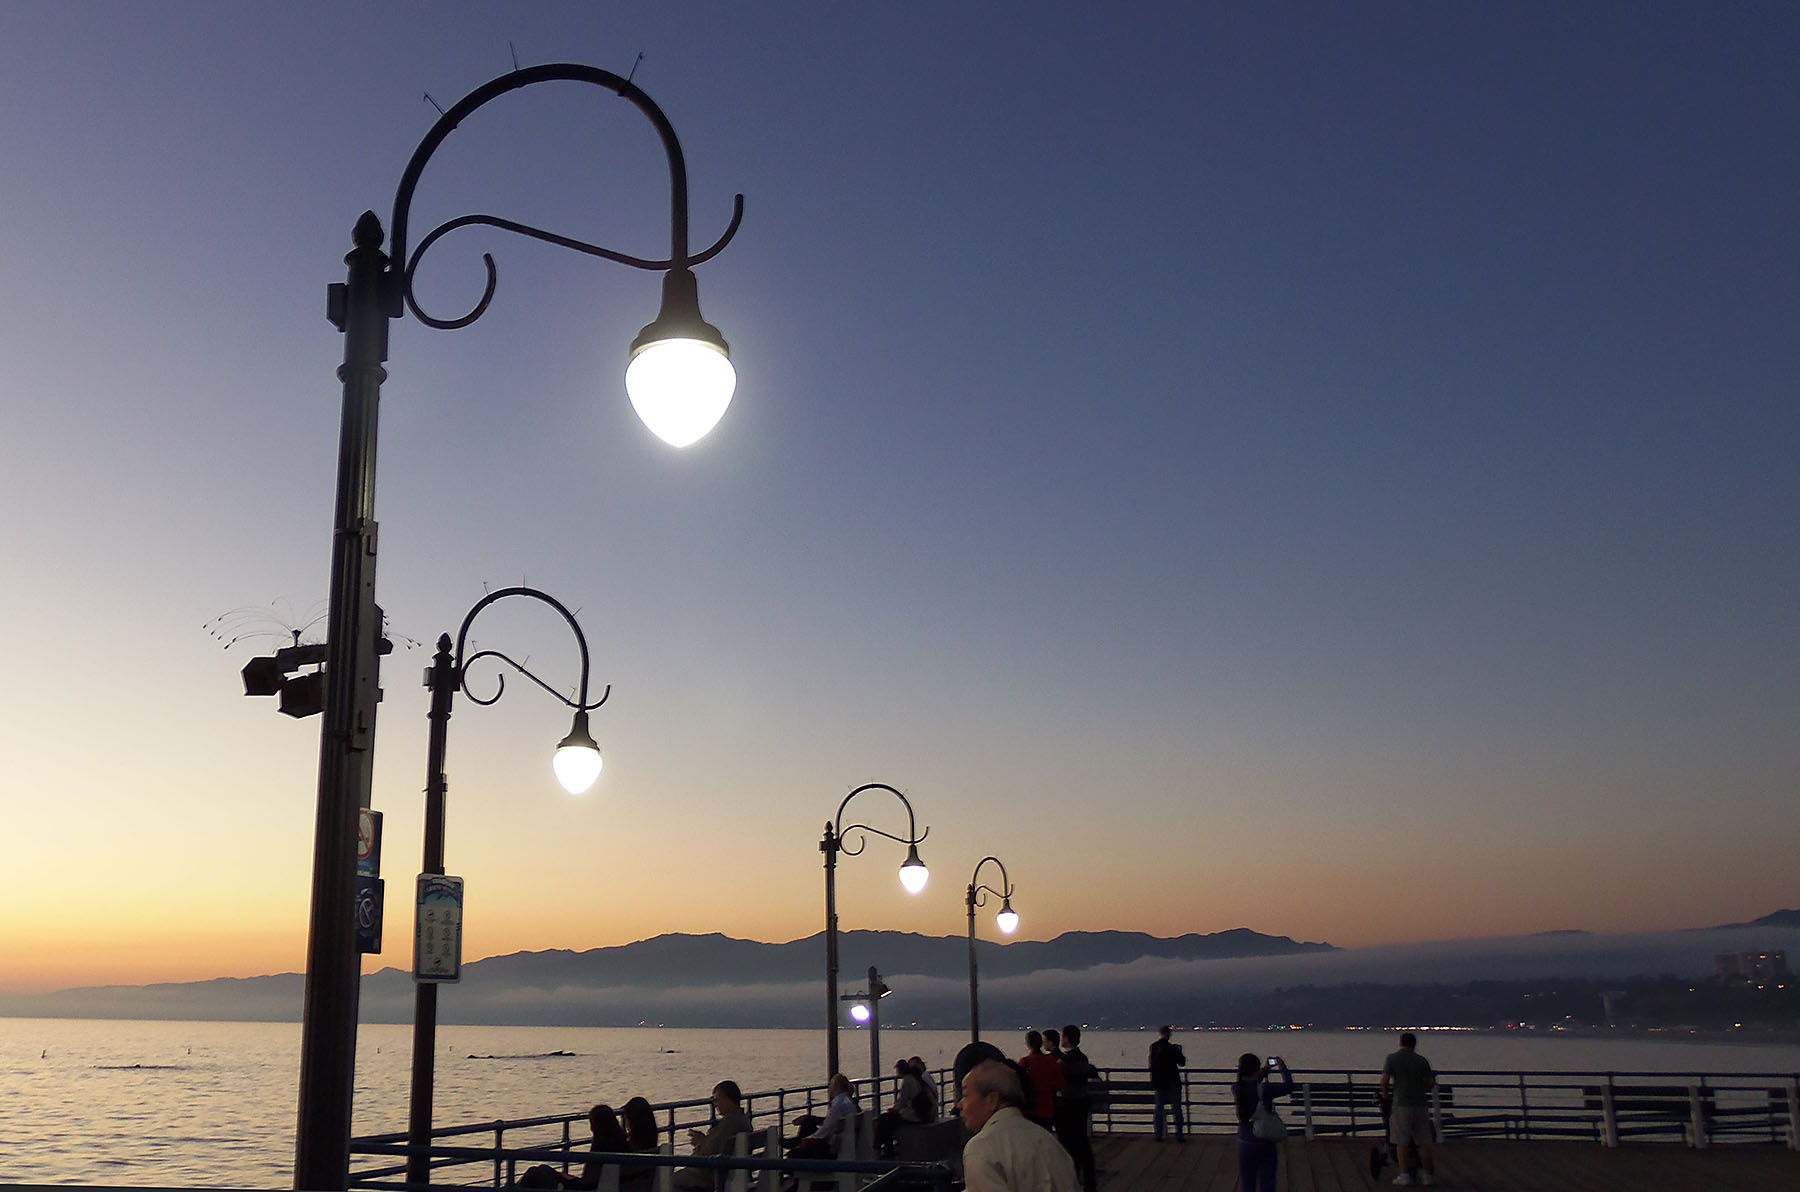 LED Lighting Reduces Energy at the Santa Monica Pier